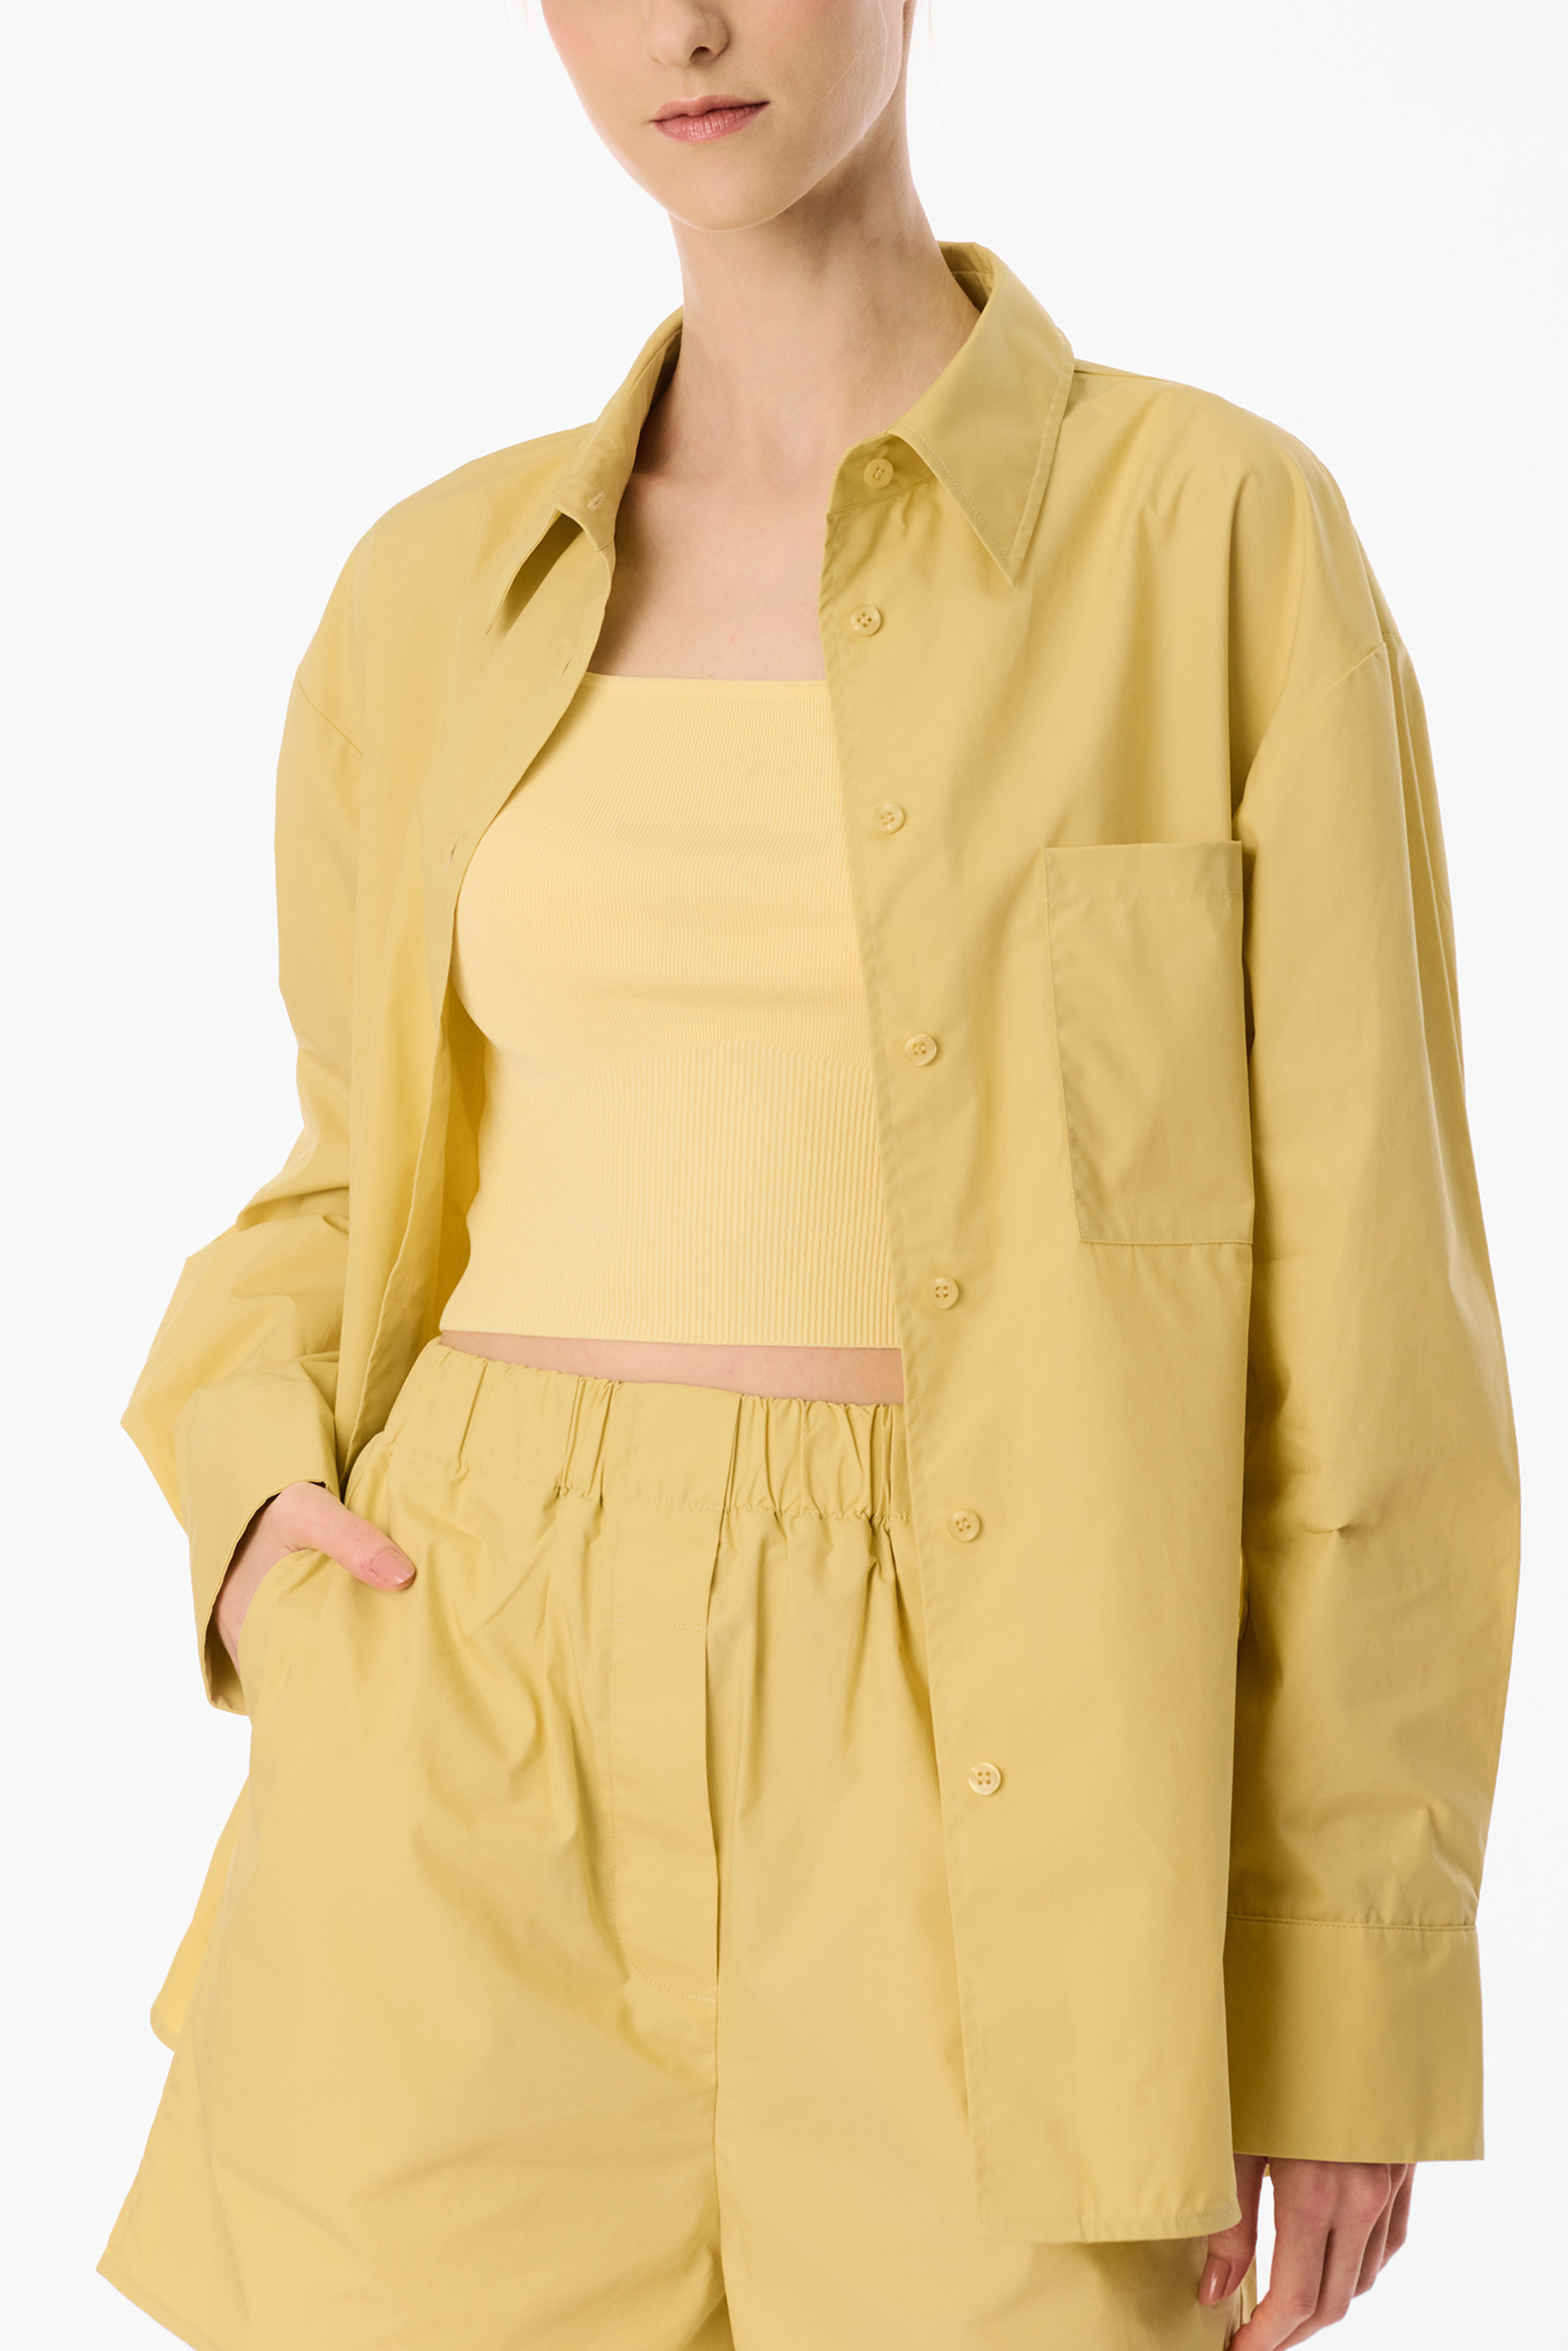 LUI oversized cotton shirt (Light yellow)